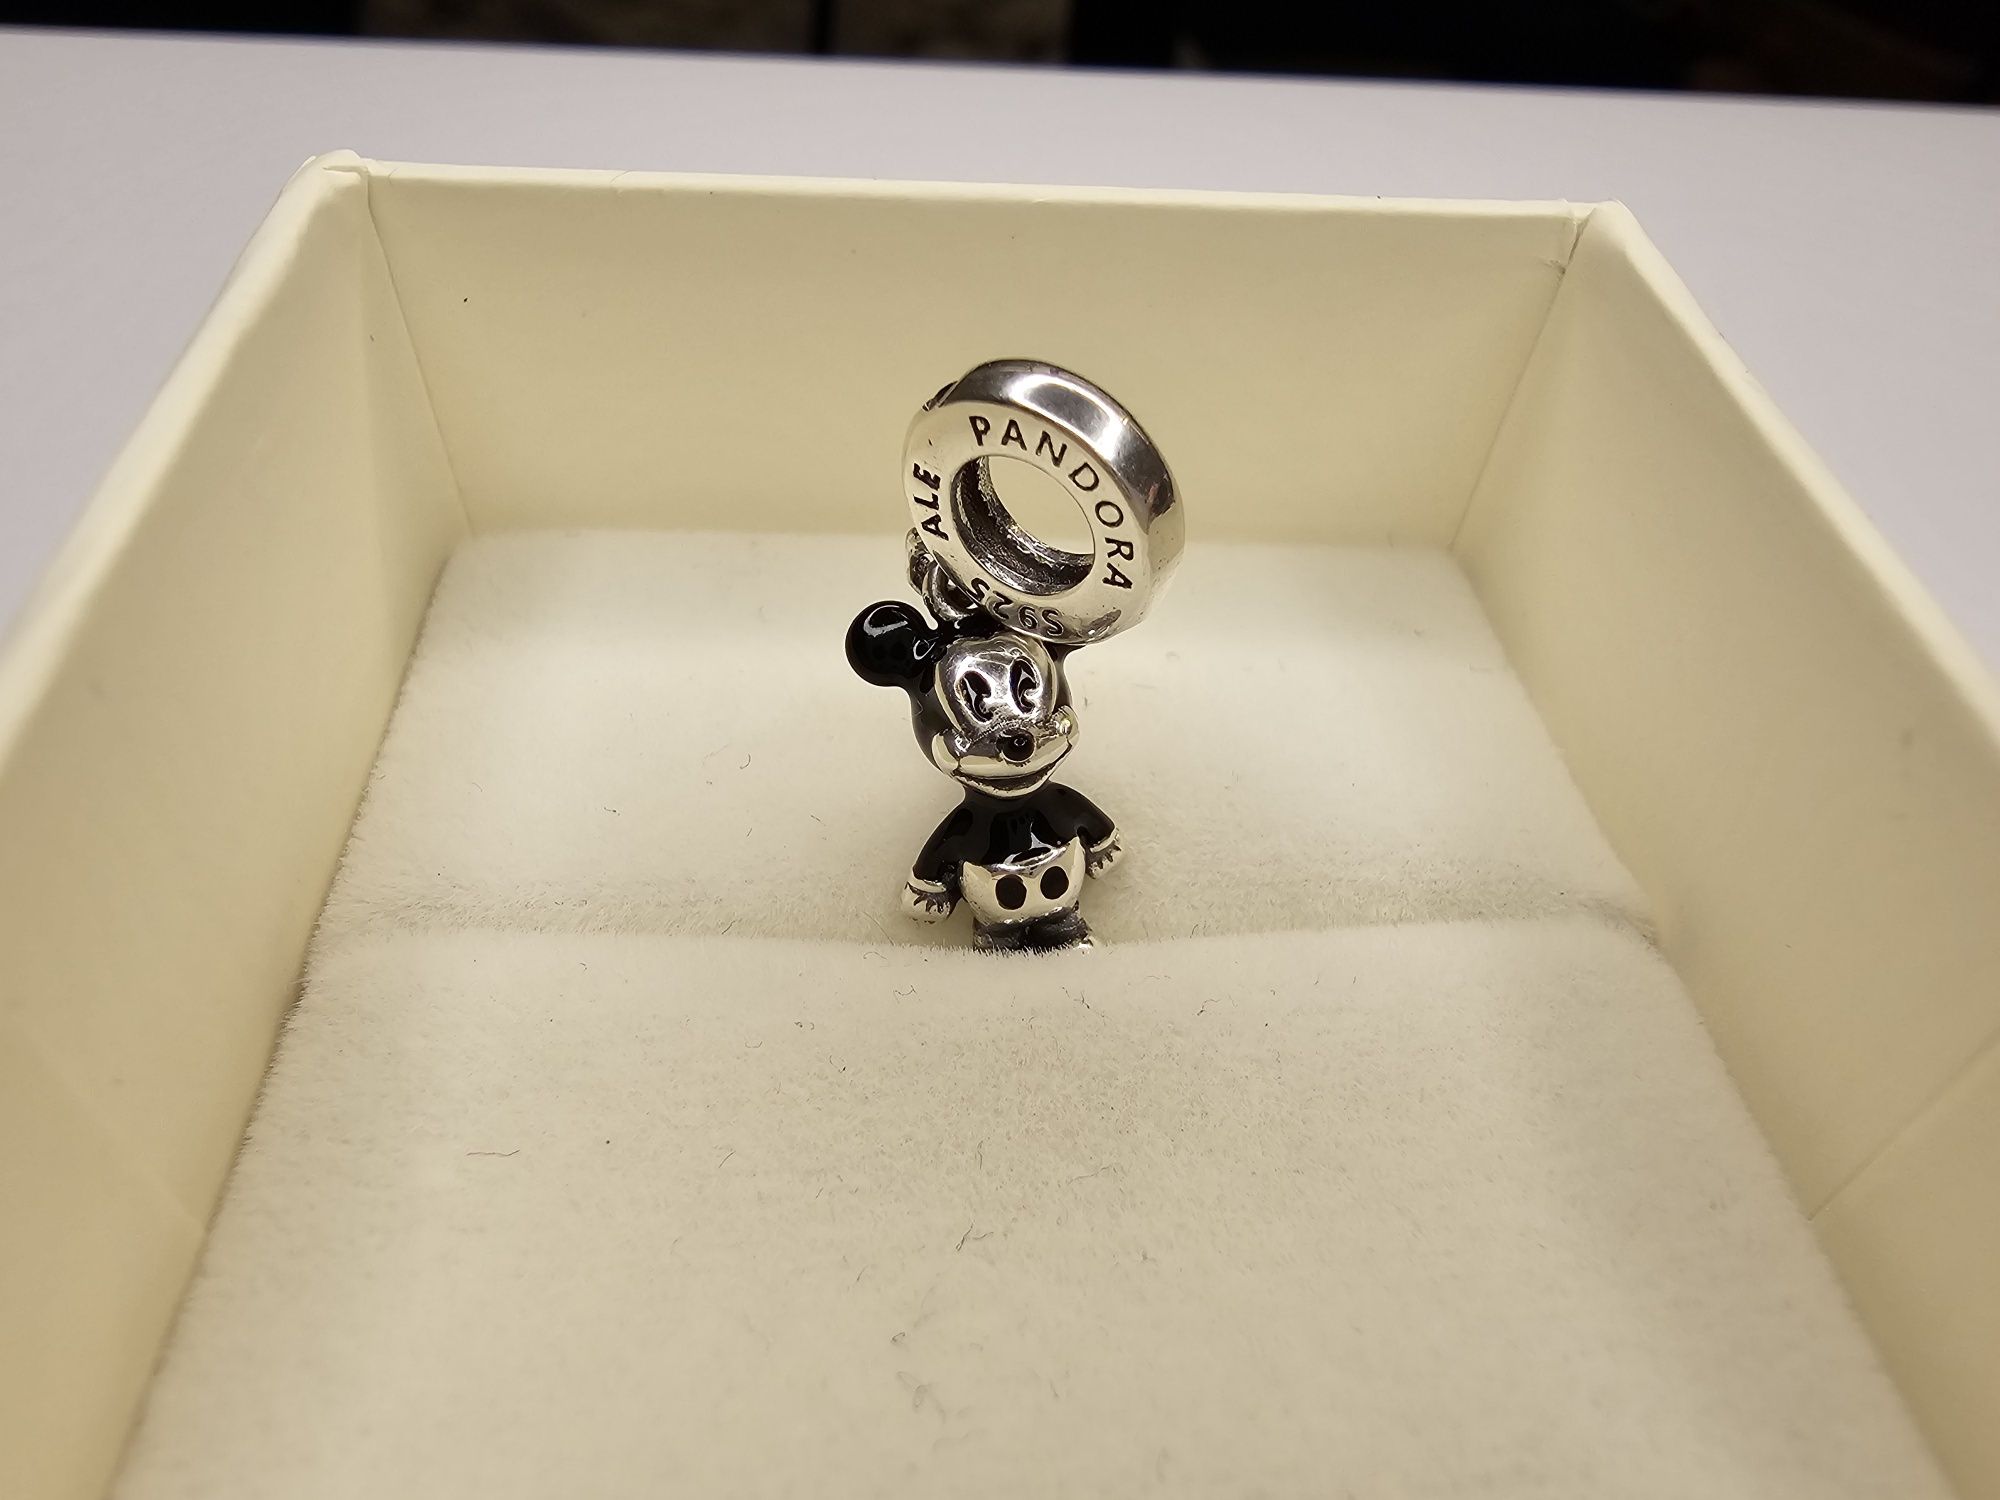 Srebrny Charms przypinka do bransoletki Pandora 925 myszka Mickey